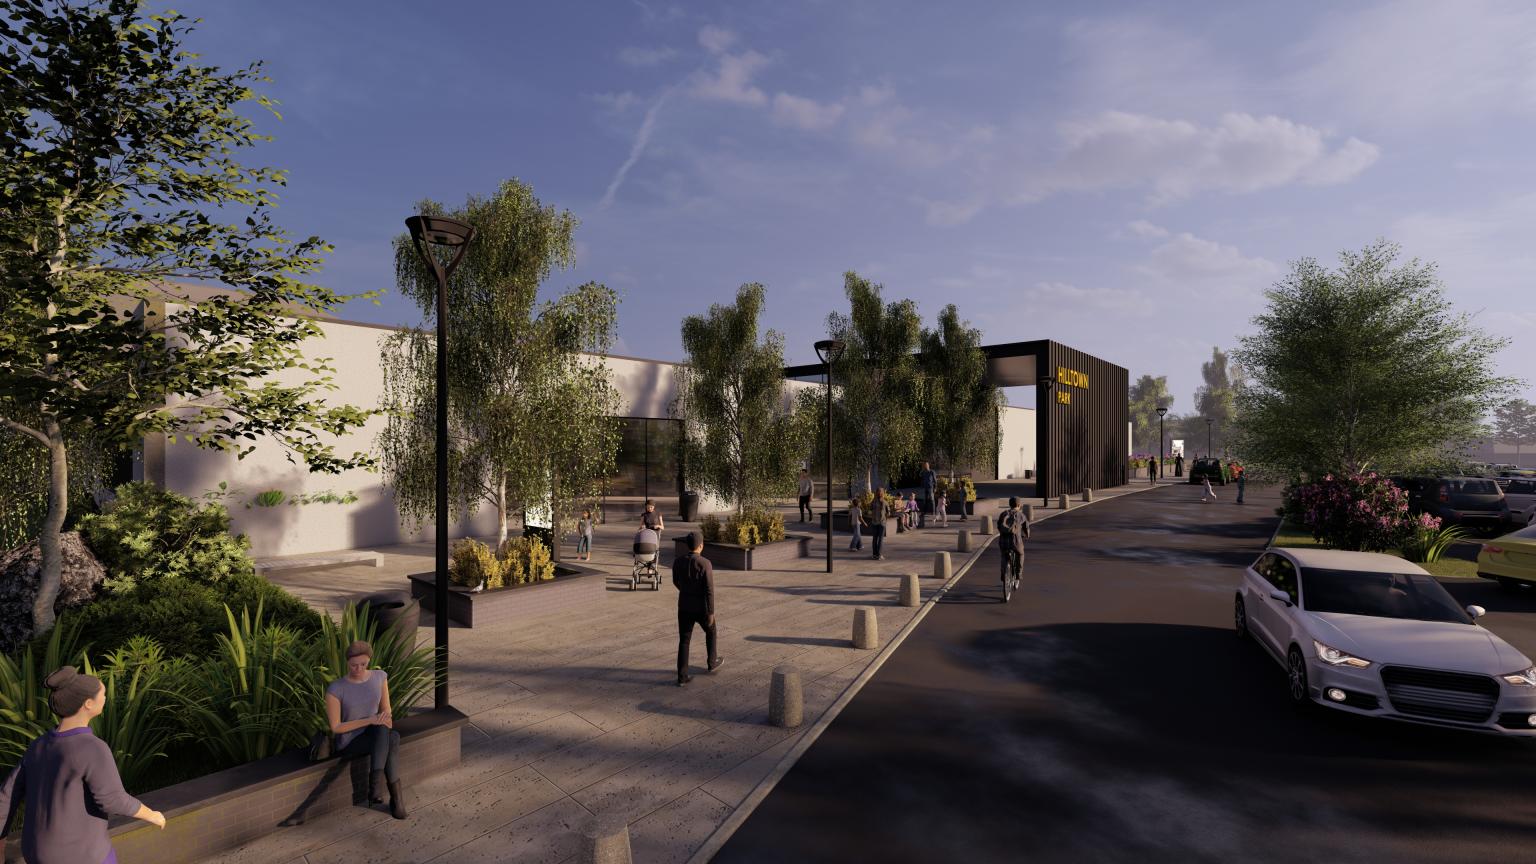 In Pictures: Brunton Design unveils Dundee leisure park proposal